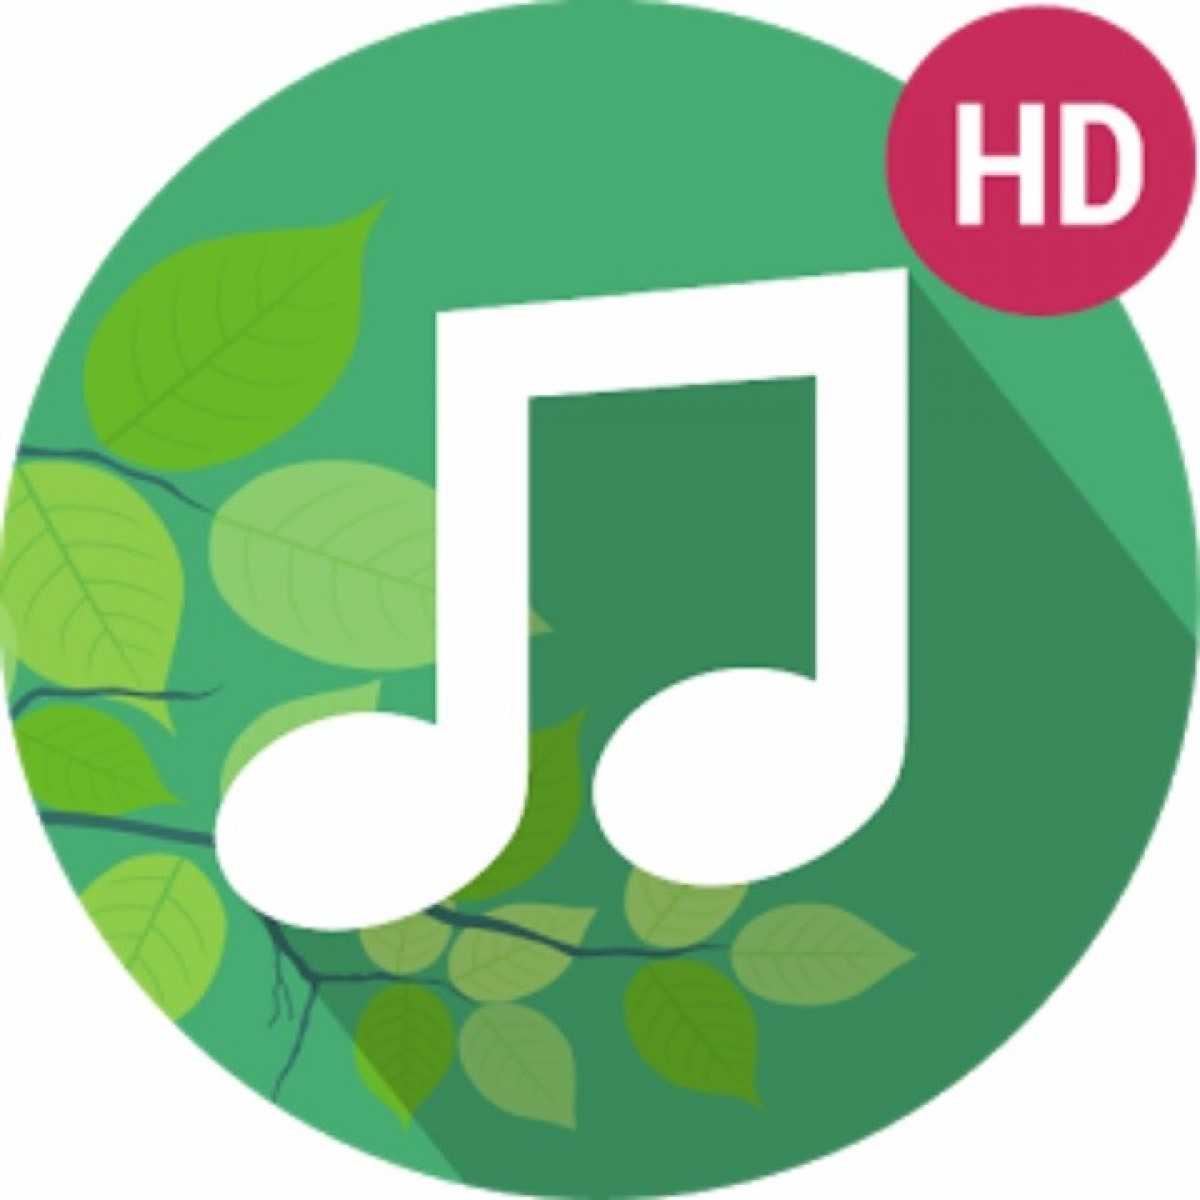 Nature Sounds HD – Sleep & Relax v3.7.0 (Premium) Apk